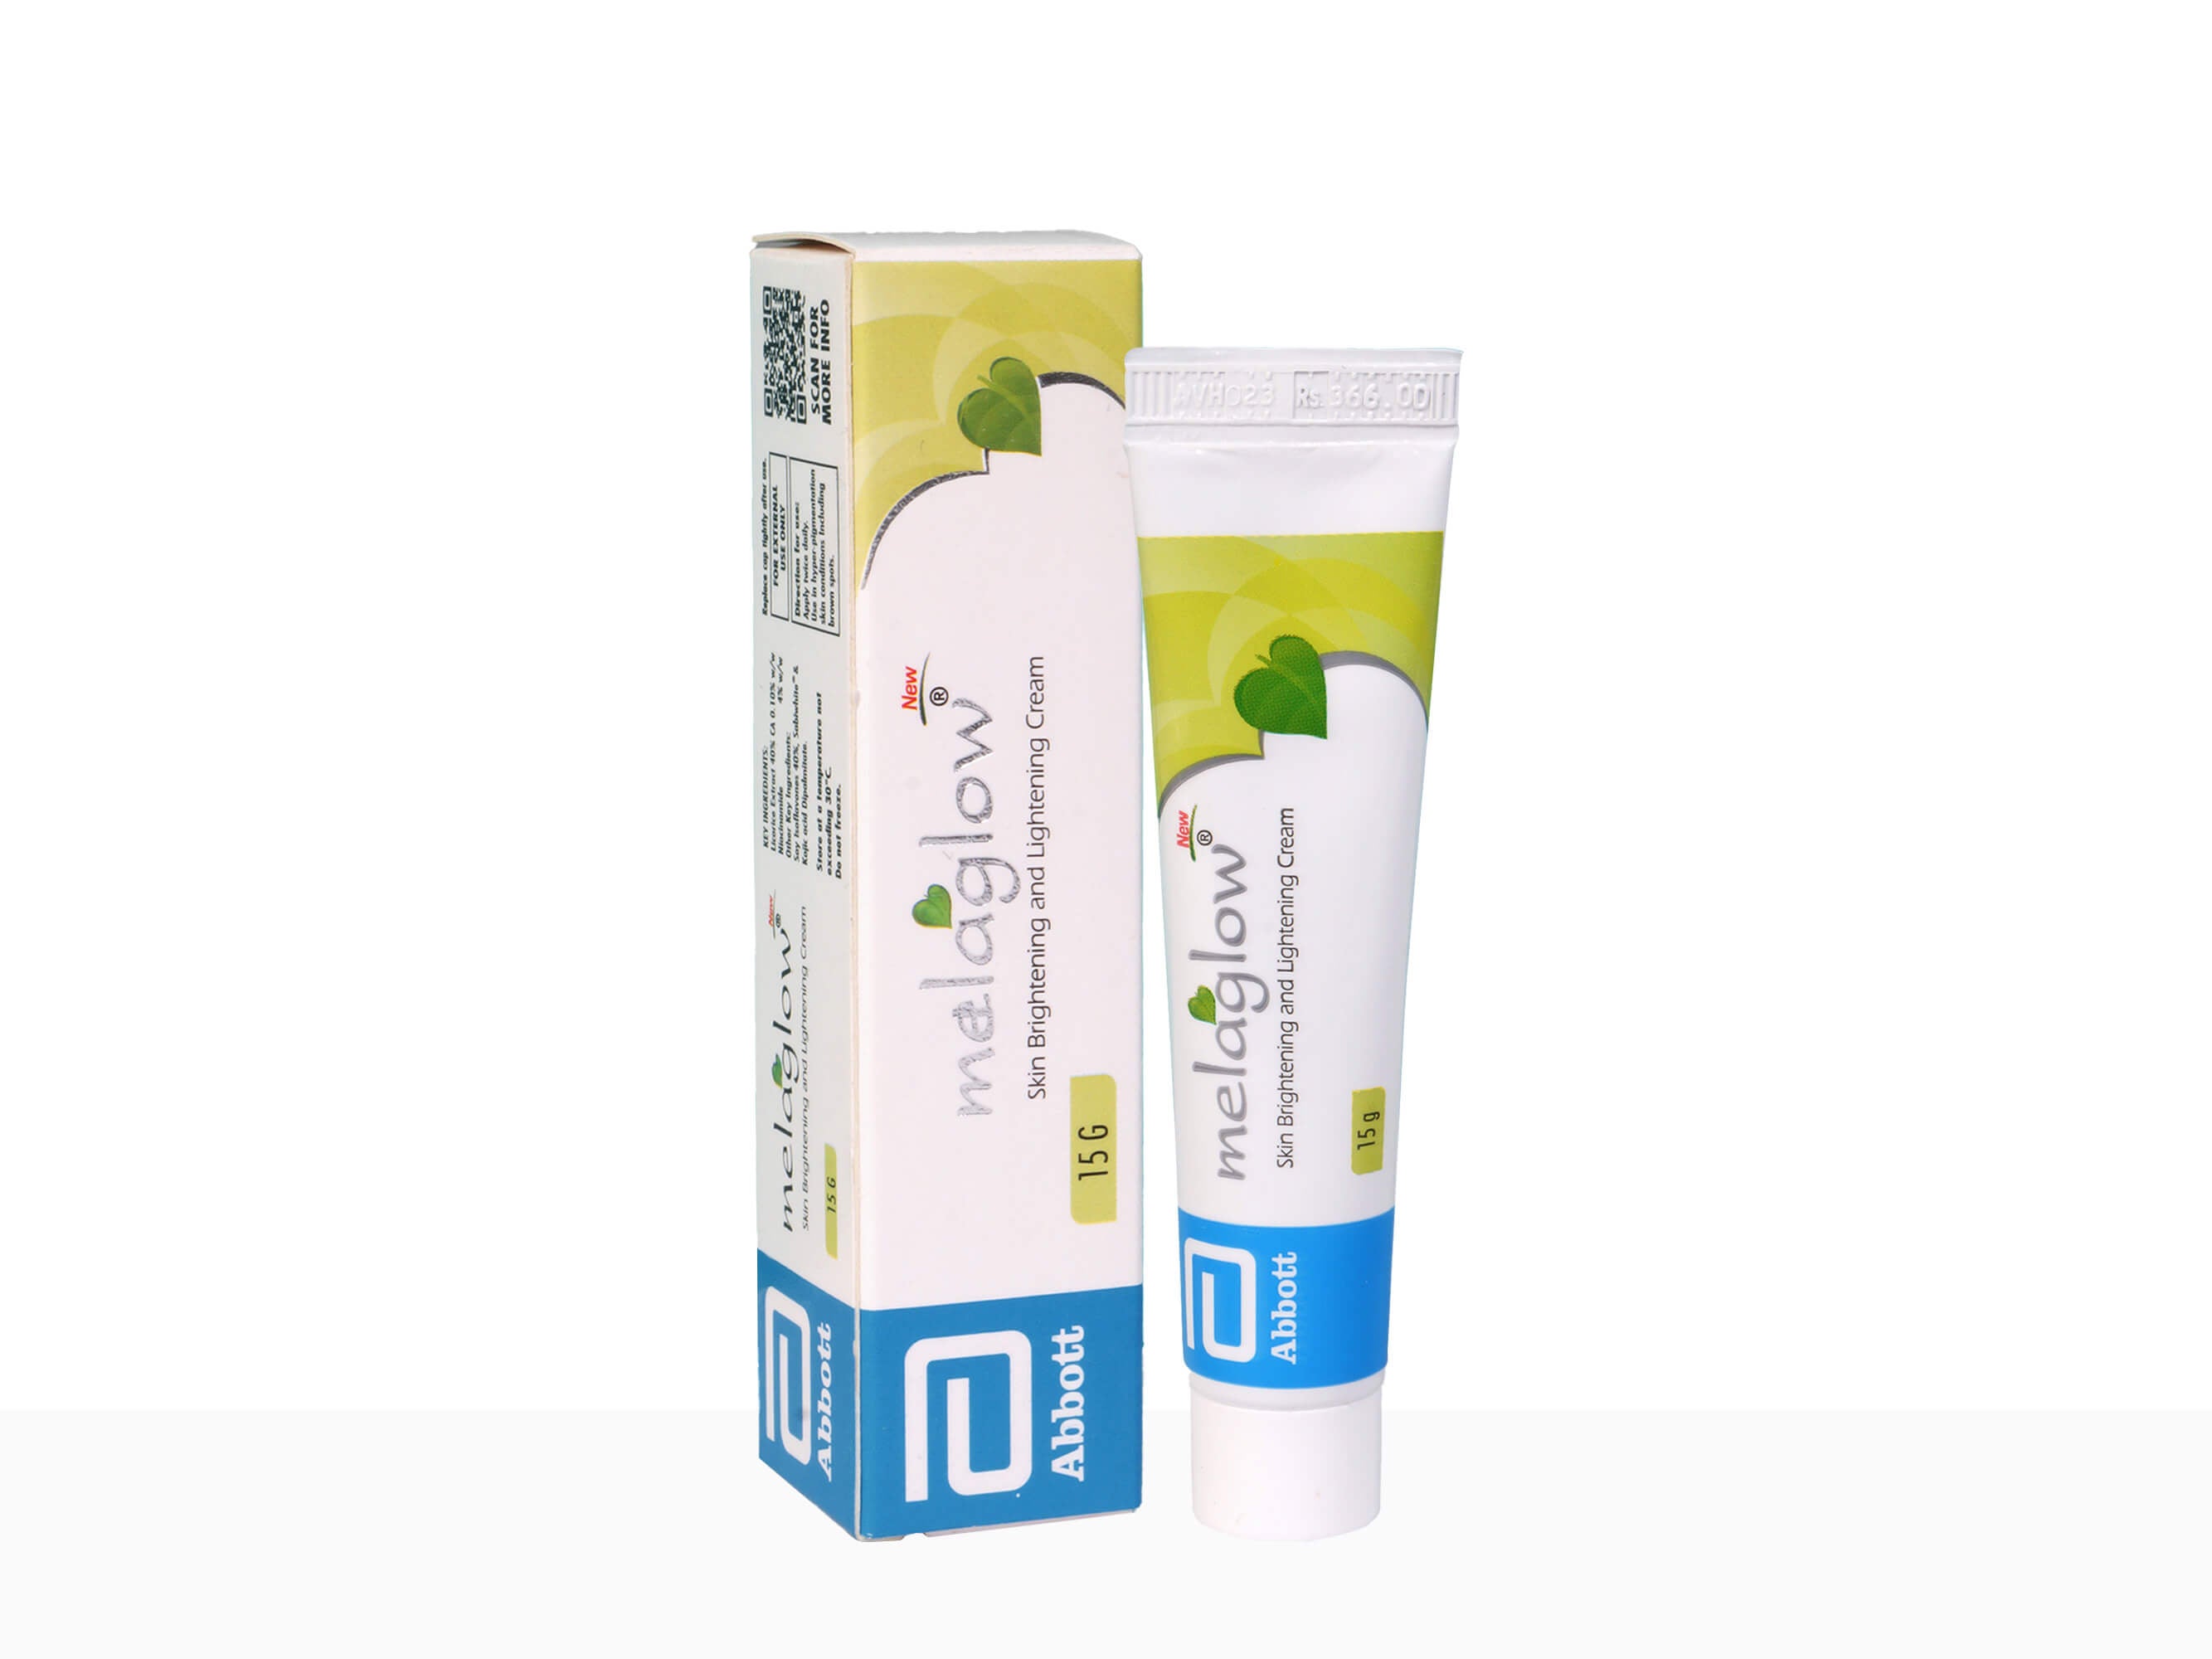 Melaglow skin brightening and lightening cream - Clinikally